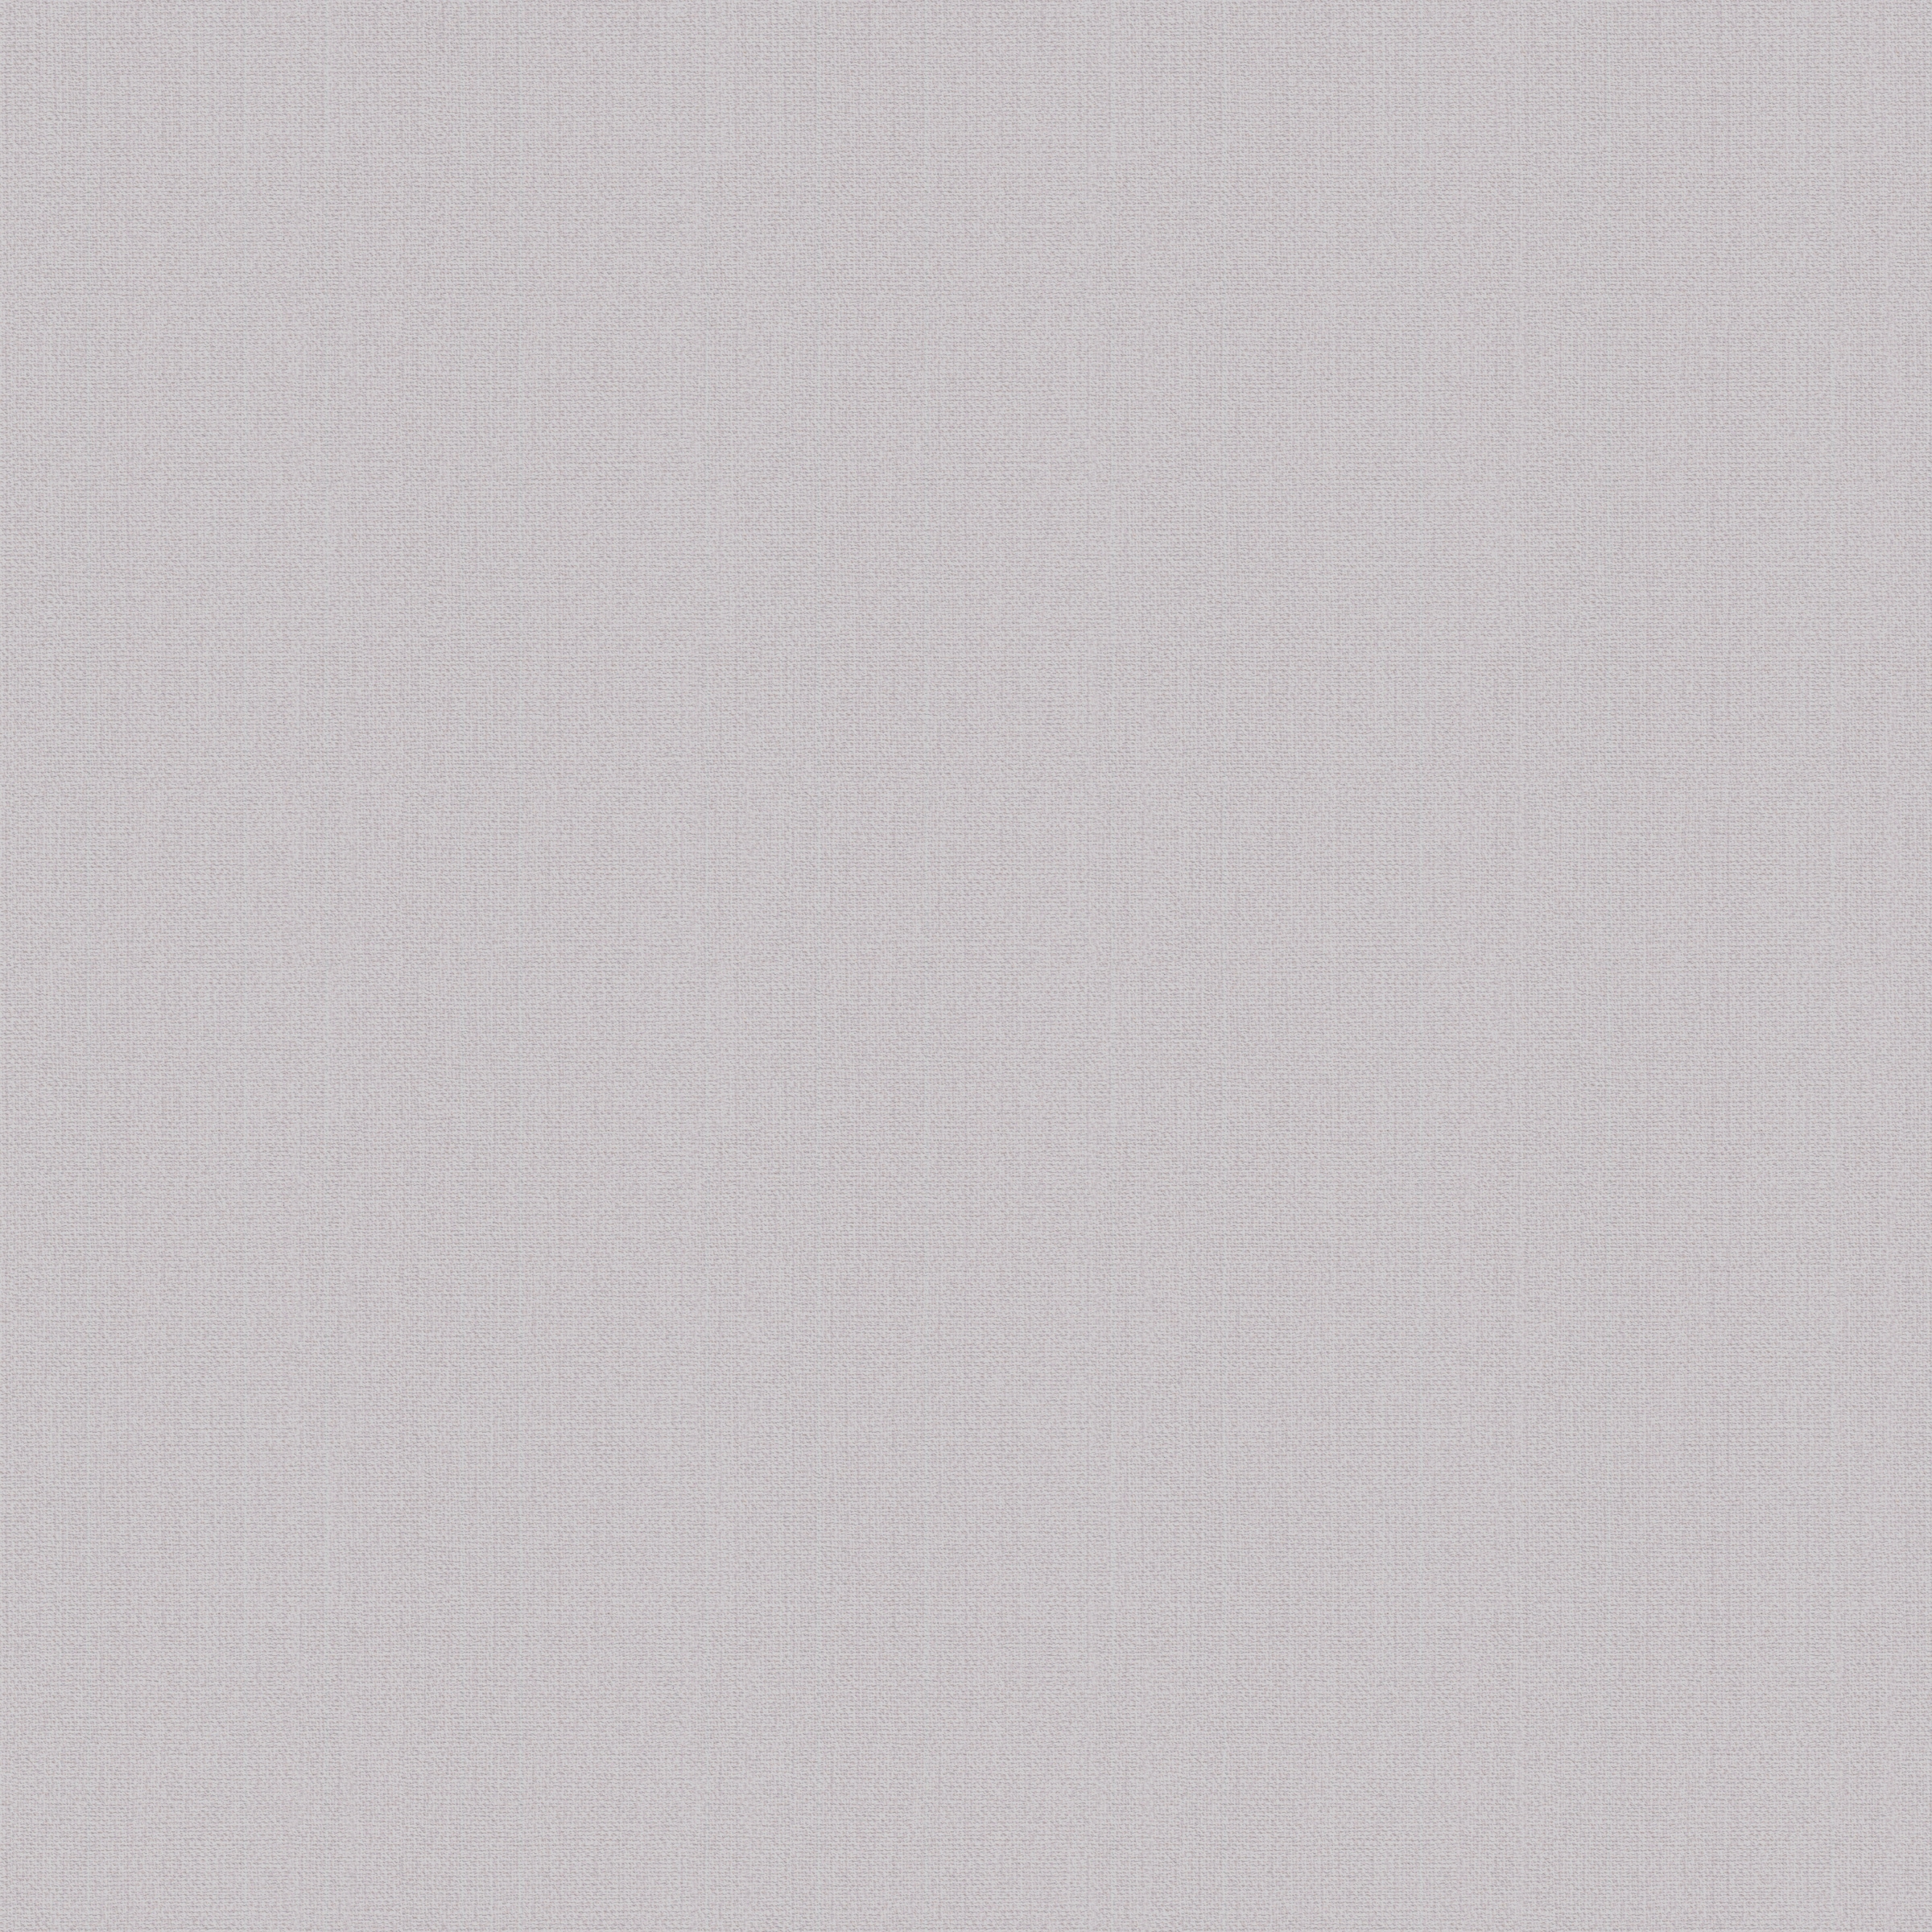 WOW Vliestapete »Baumwolle«, Weiß/Grau - 10m x 52cm